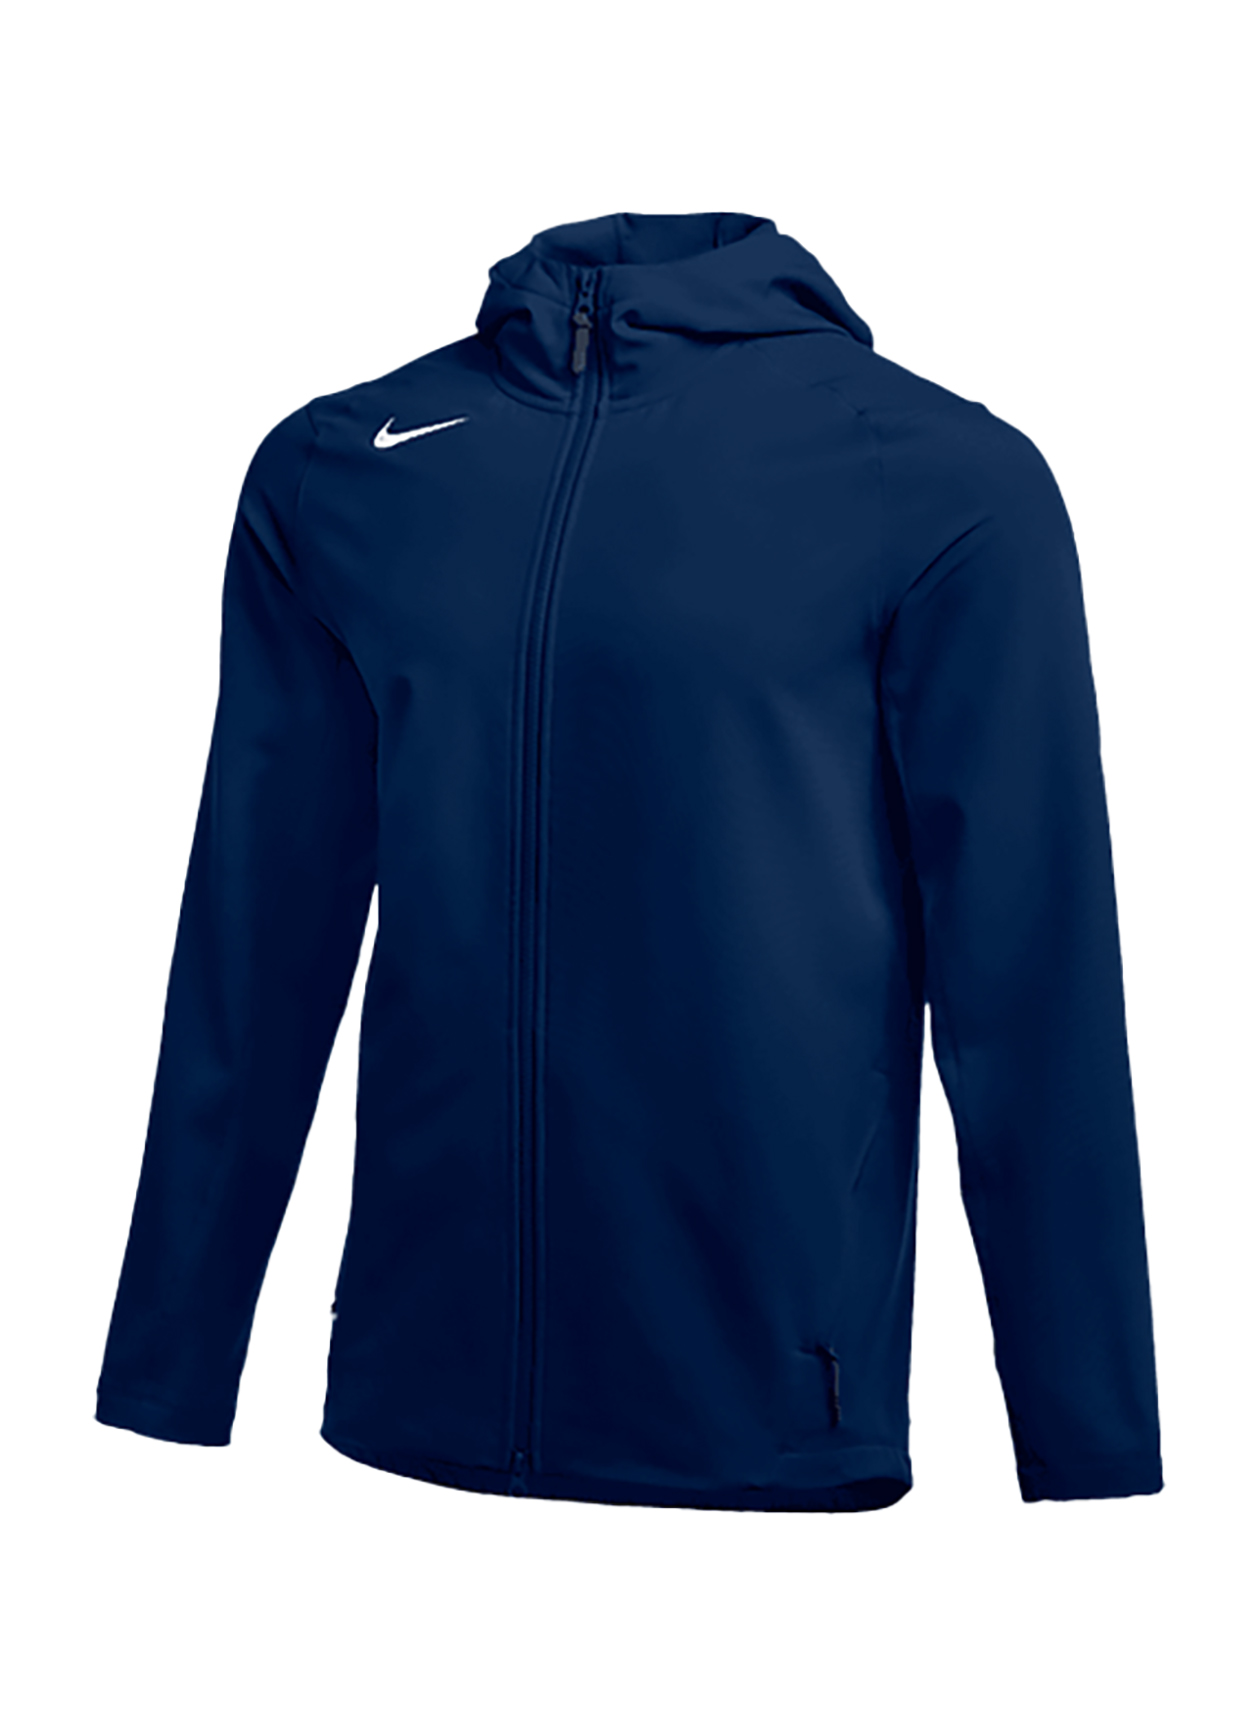 Nike Men's Team Navy Full Zip Heavy Jacket